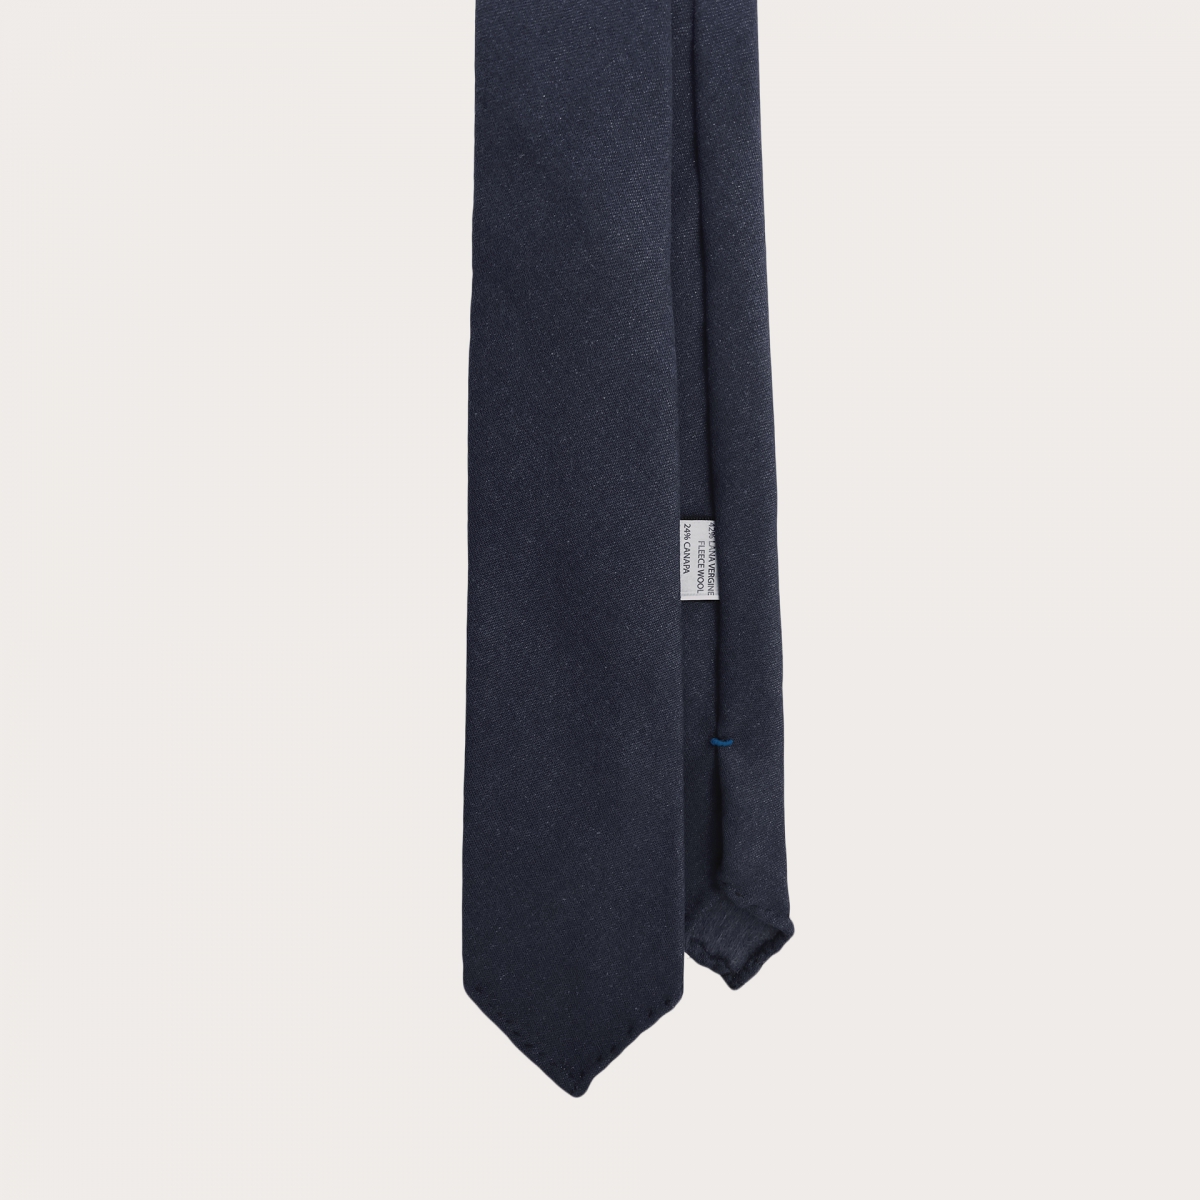 Unlined necktie blue